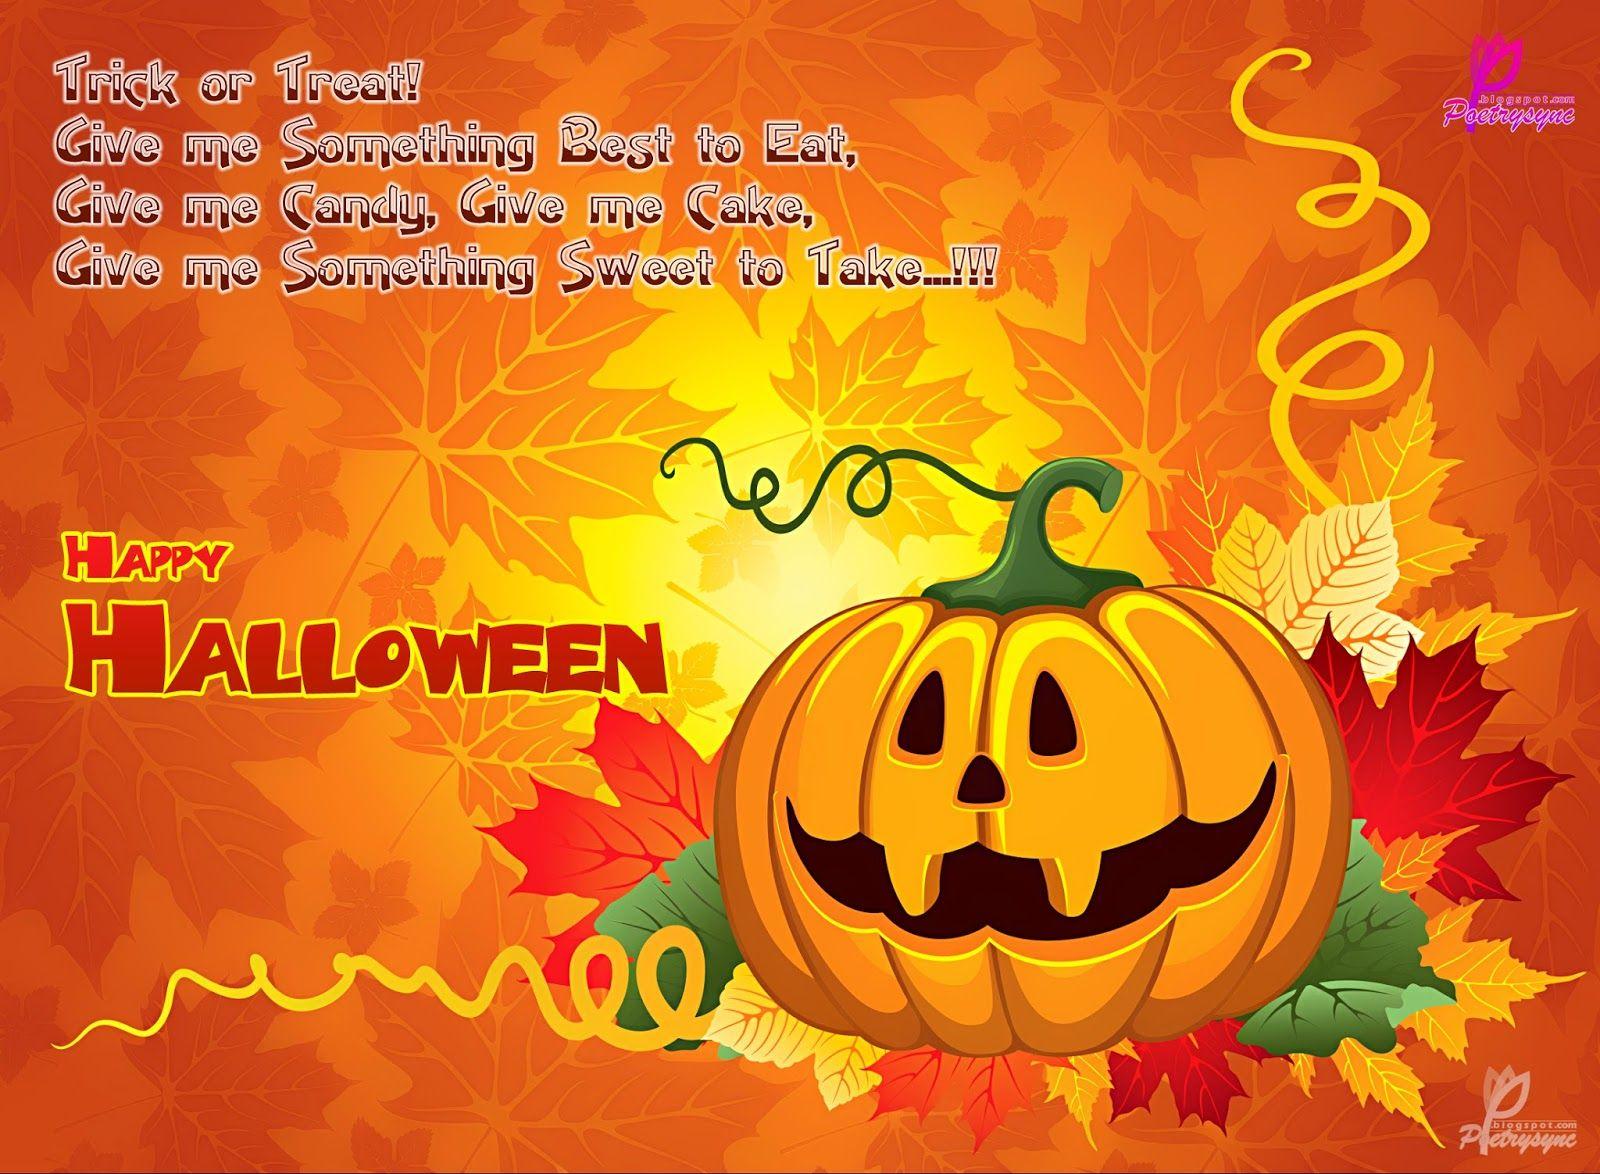 Kid Friendly Halloween Quotes. Hocus Pocus Halloween